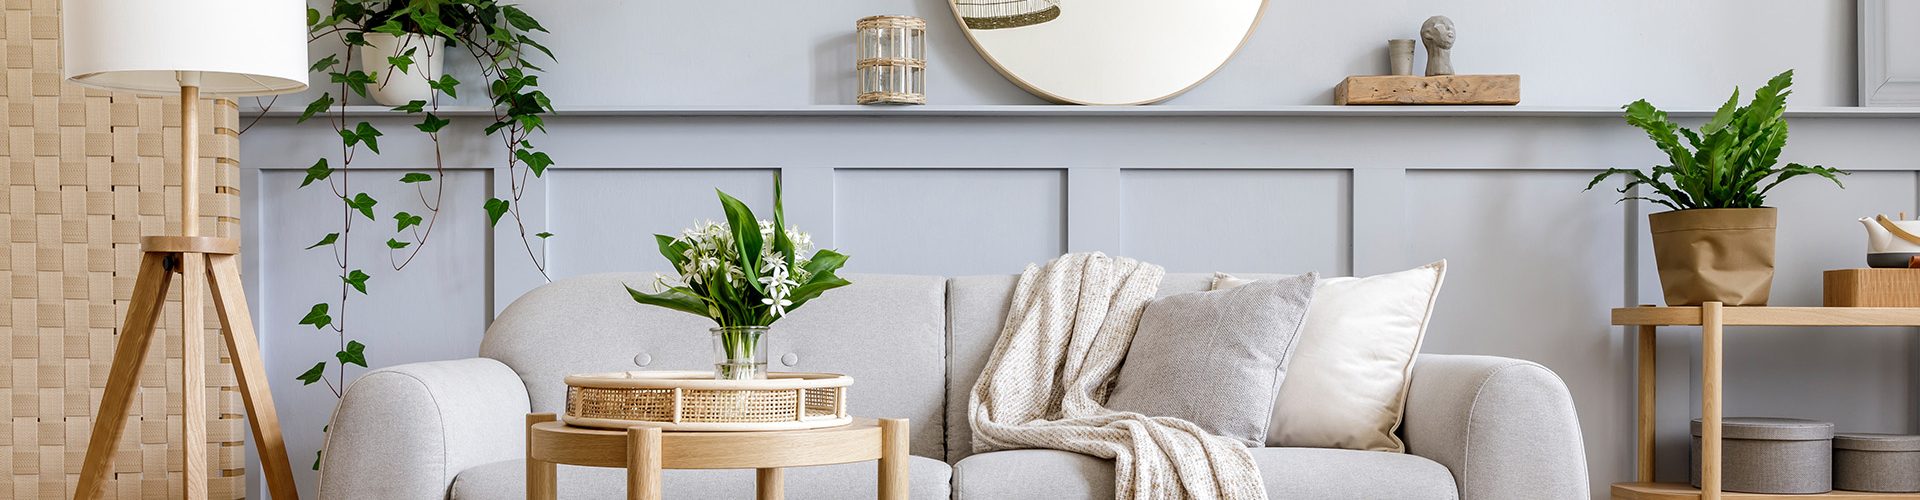 1.scandinavian-living-room-interior-with-design-grey-sofa-wooden-coffee-table-tropical-plants-shelf-mirror-furniture-plaid-pillow-teapot-book-elegant-personal-accessories-home-decor